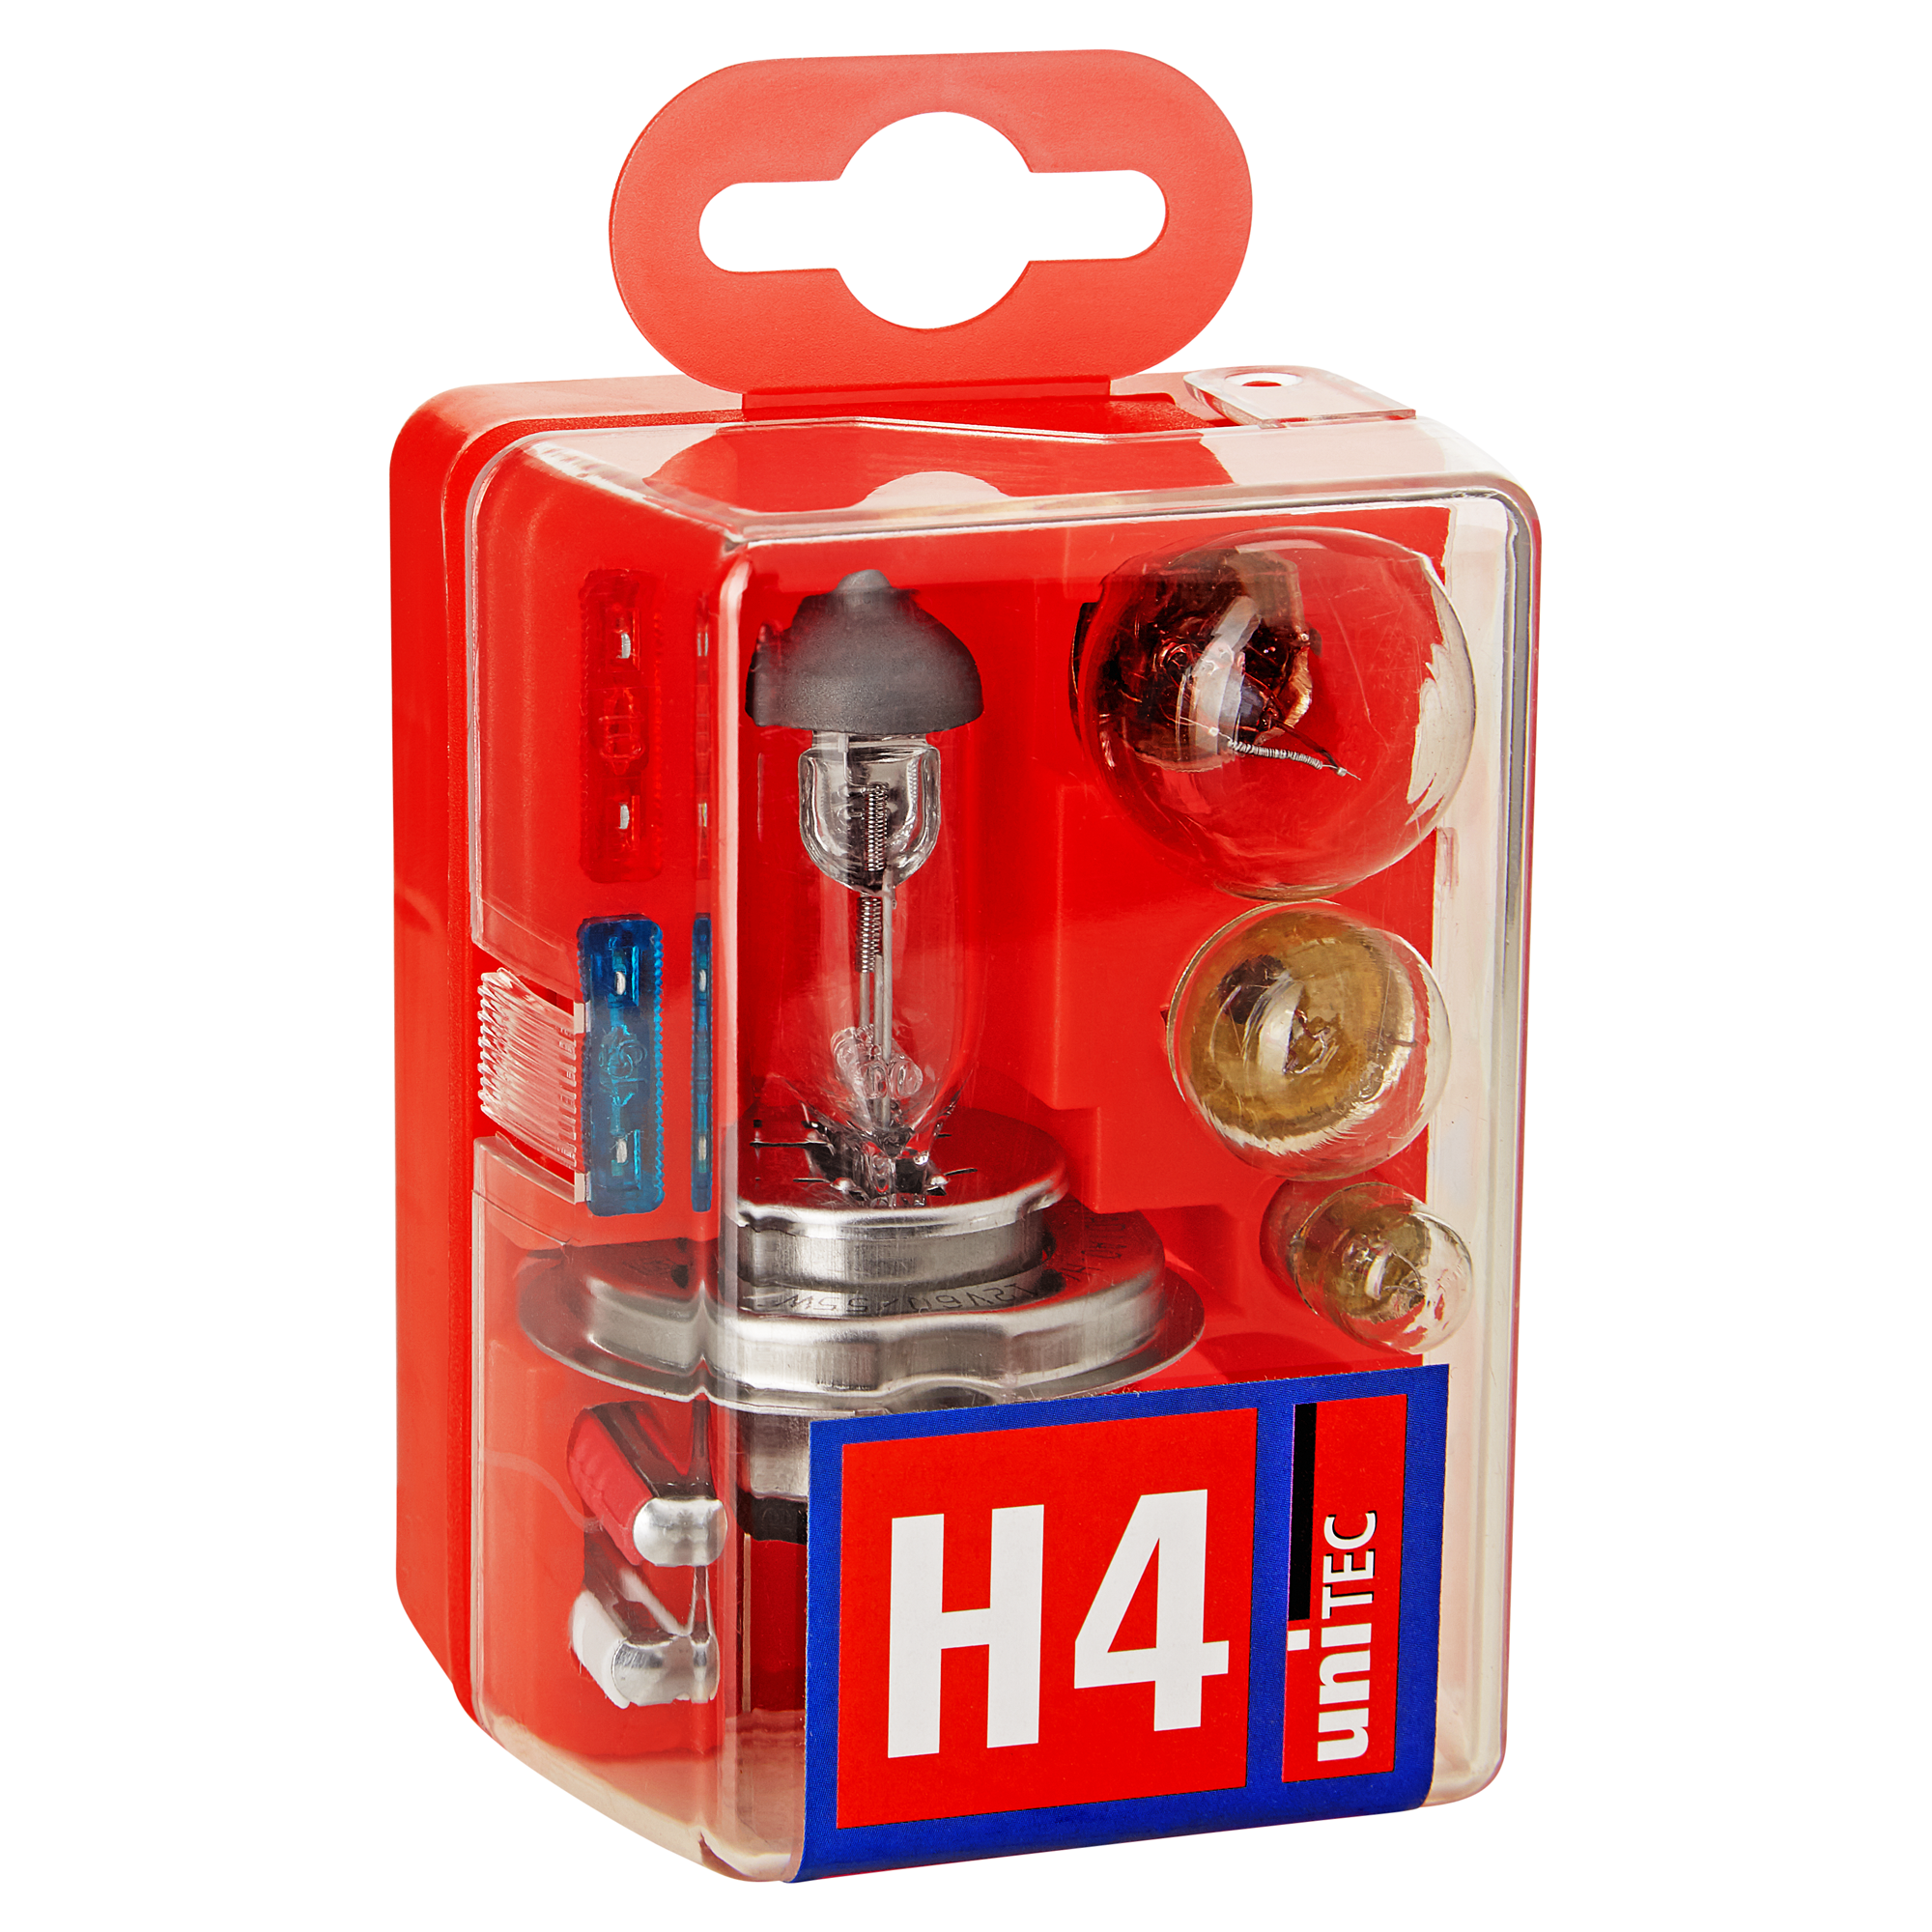 Lampenbox-Set H7 10-tlg.